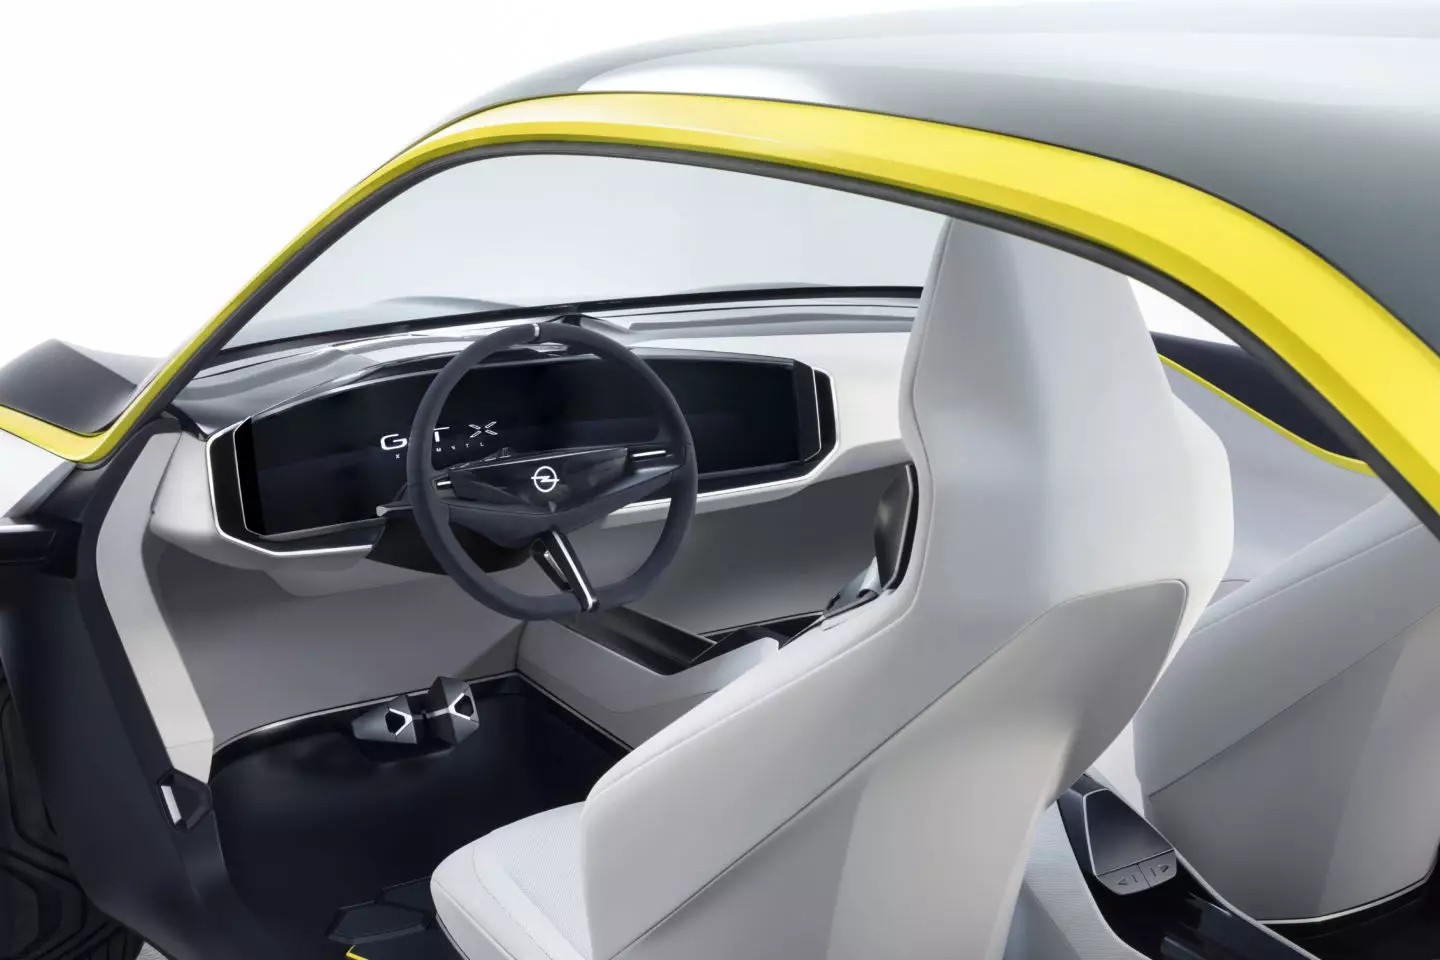 2018 Opel GT X эксперименталь